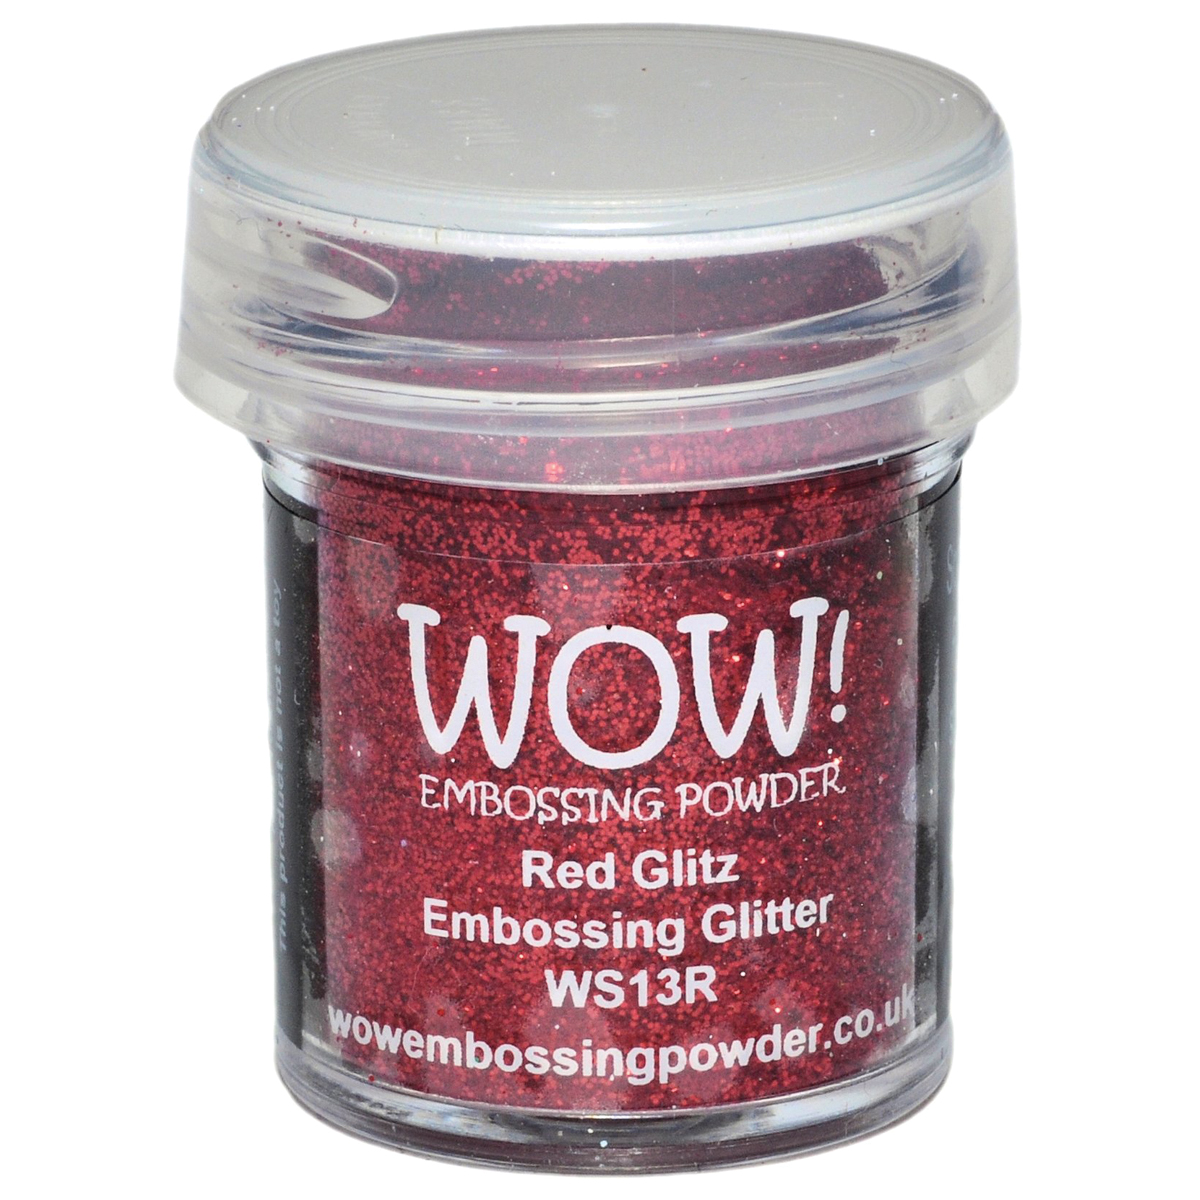 WOW! Embossing Powder 15ml-Red Glitz - image 1 of 2